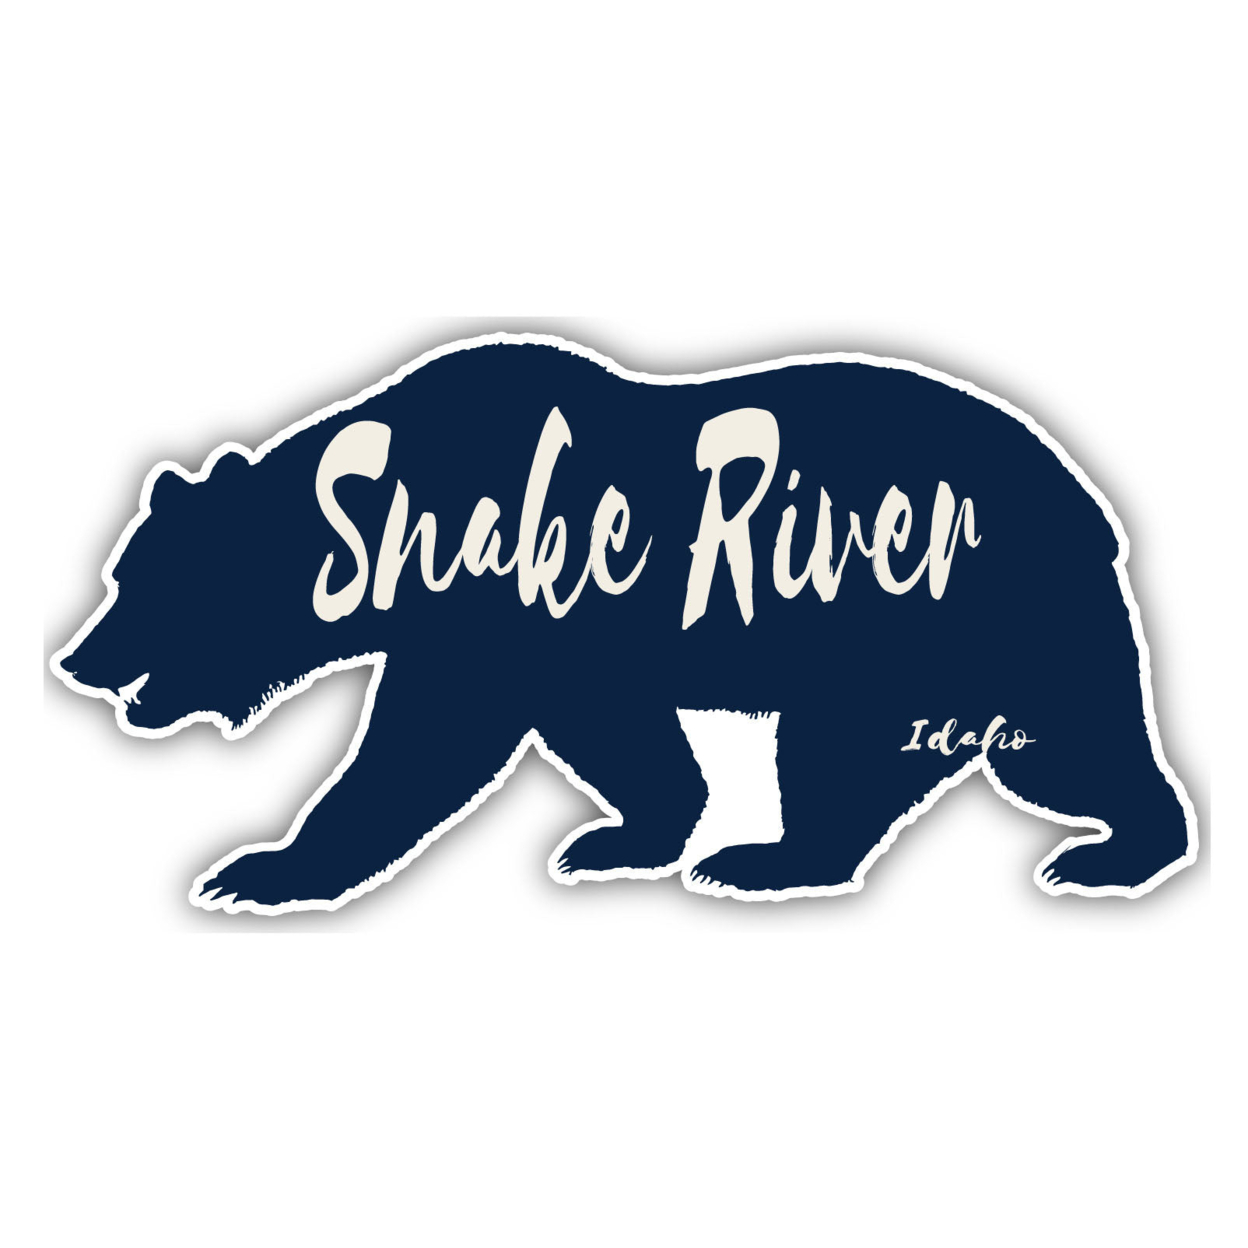 Snake River Idaho Souvenir Decorative Stickers (Choose Theme And Size) - Single Unit, 4-Inch, Camp Life